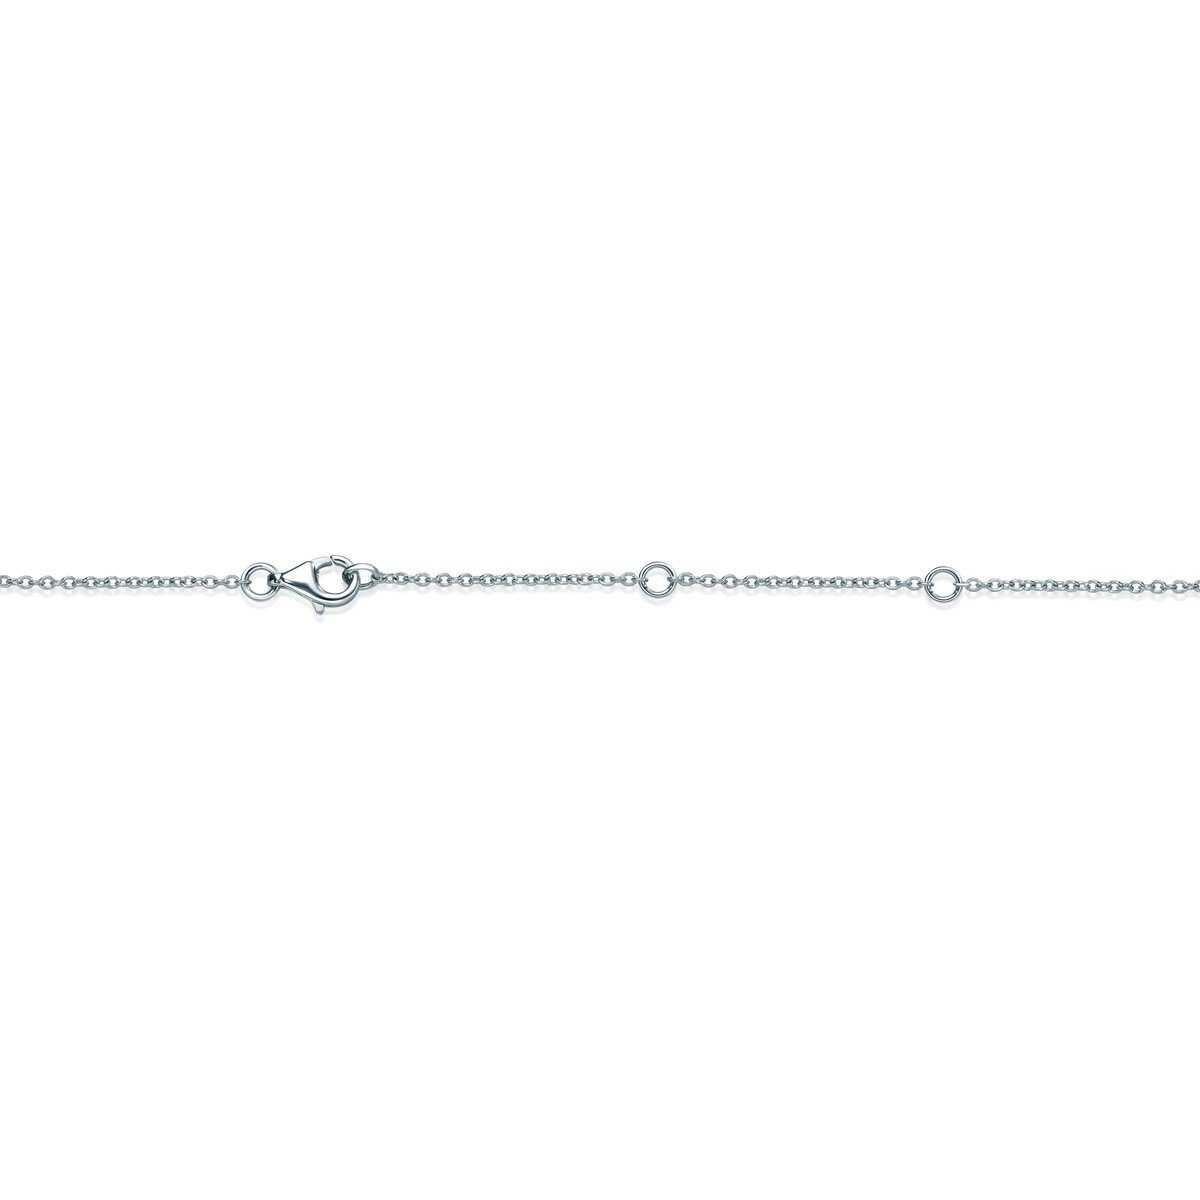 Brilliant Cut Memoire Diamond Classic Smile Necklace 1ct. TW. Set In 18k White Gold For Sale